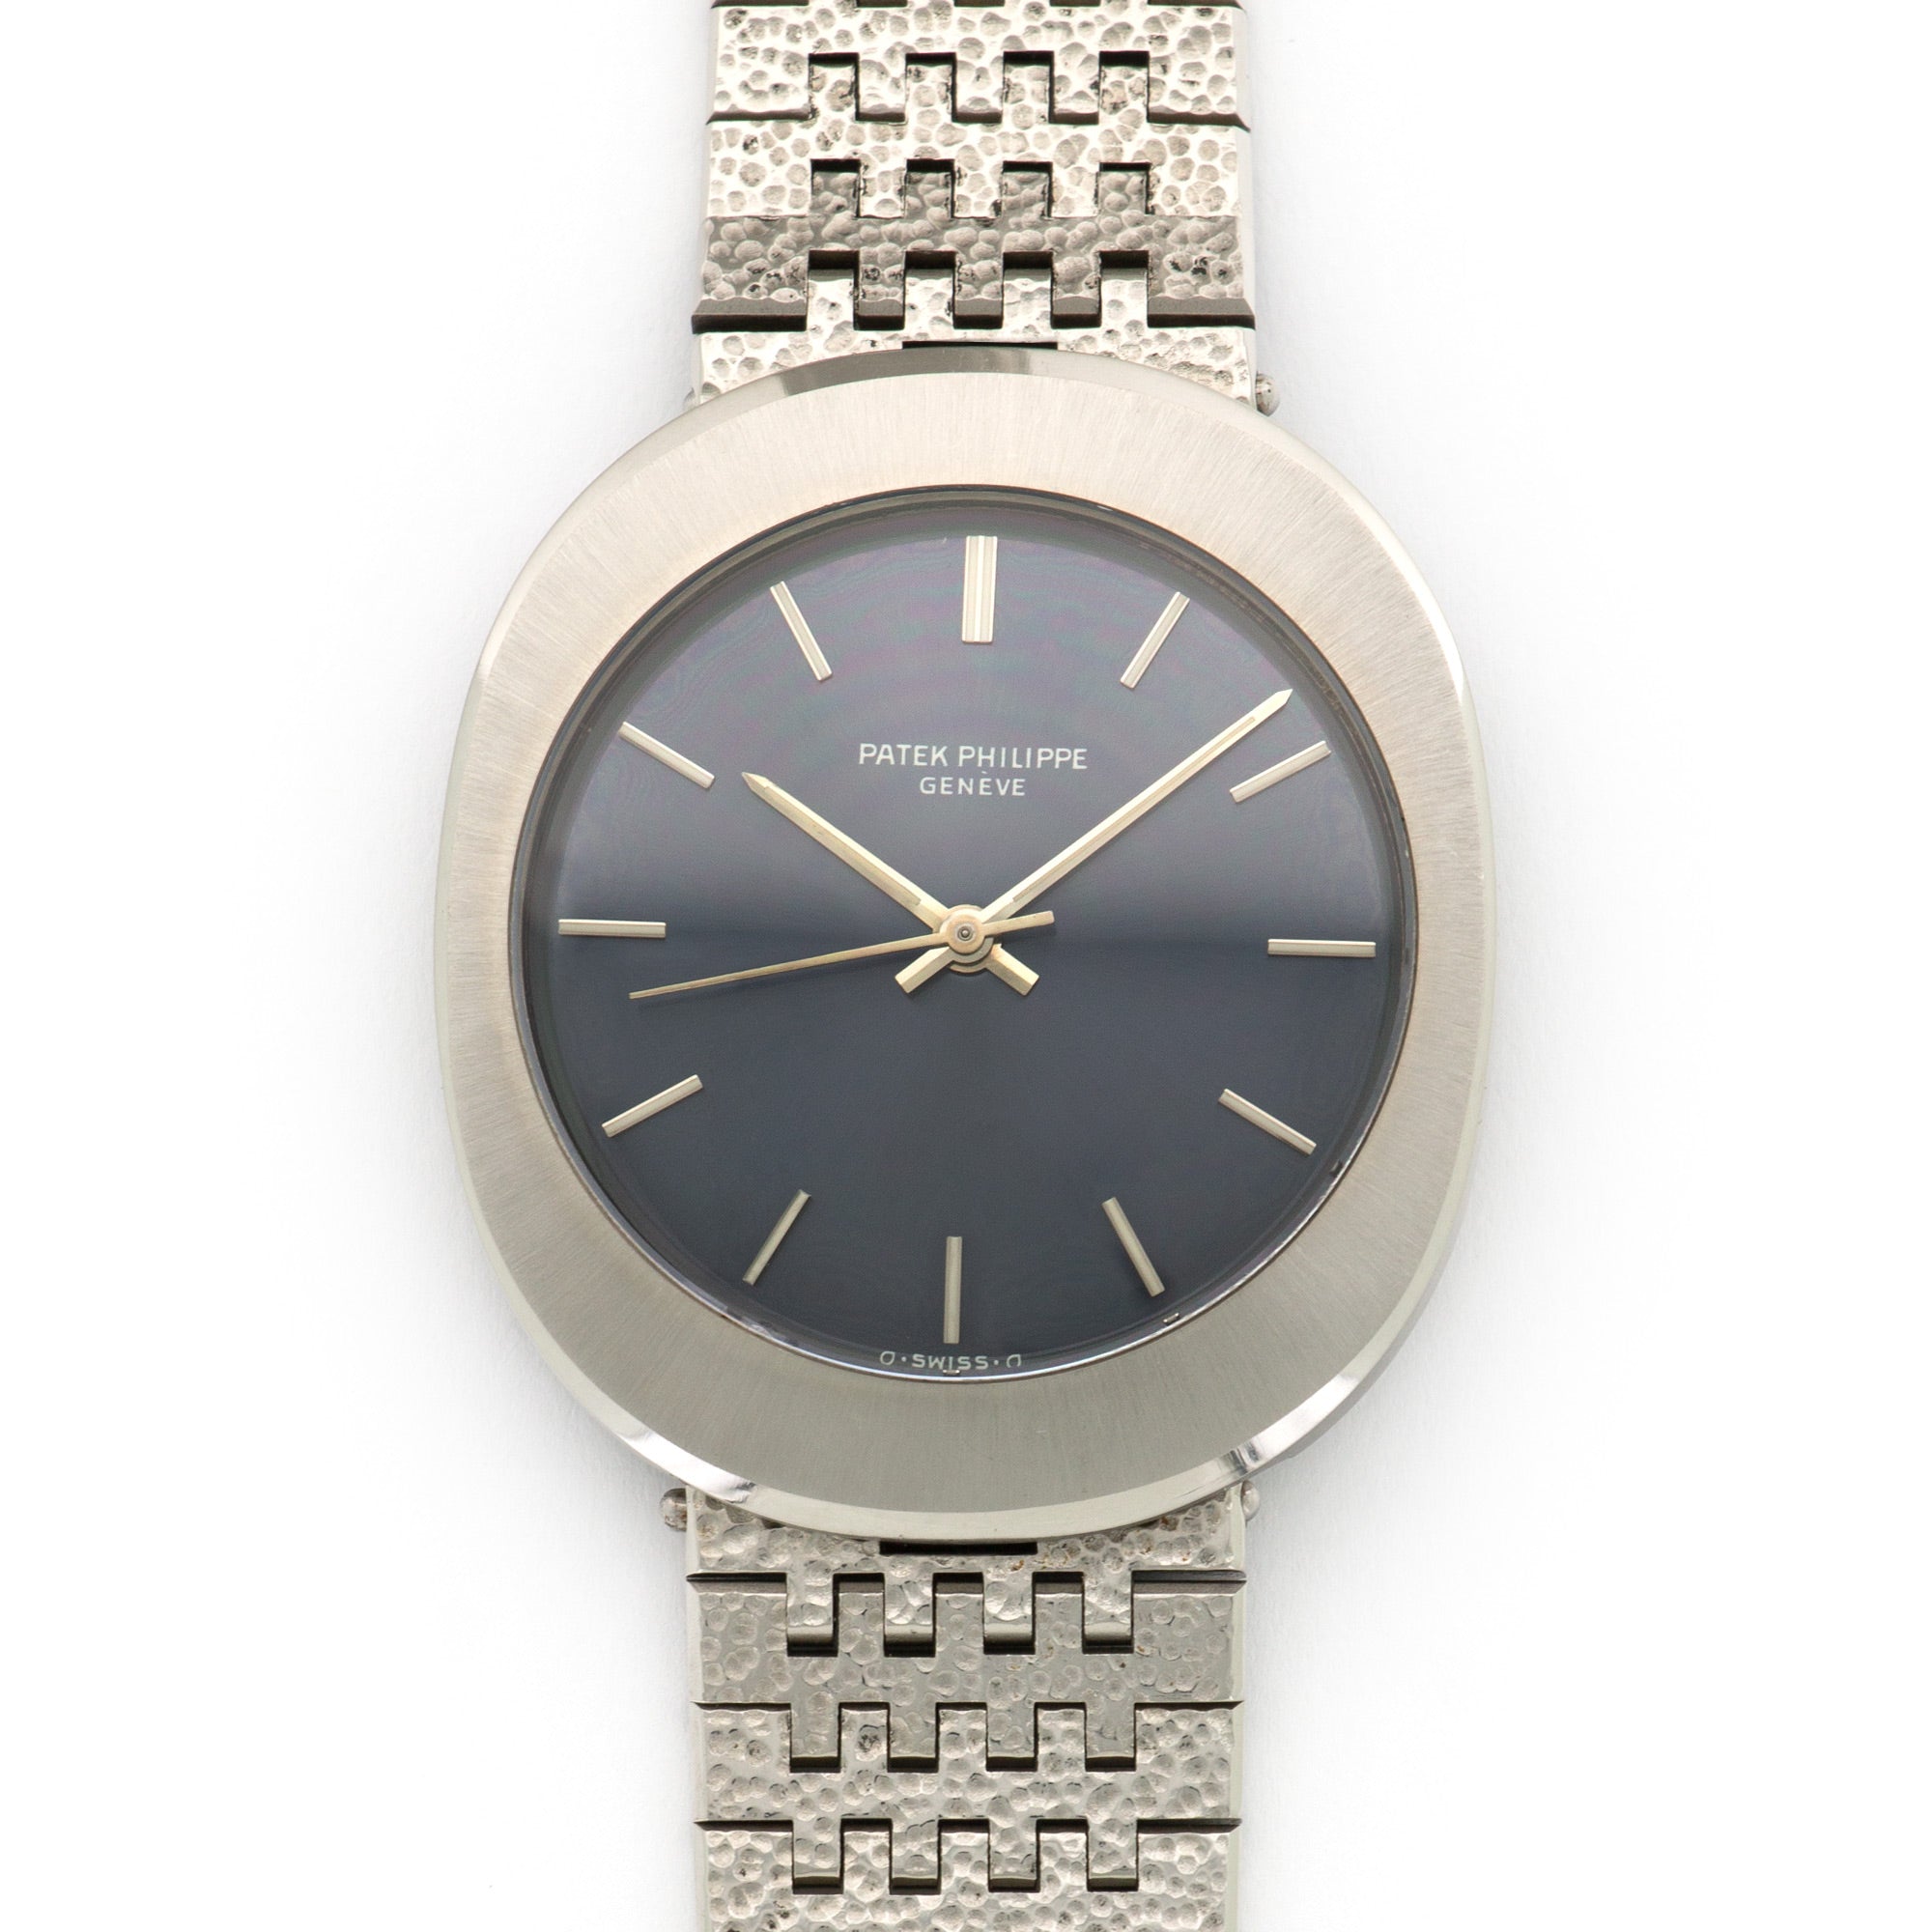 Patek Philippe - Patek Philippe Stainless Steel Automatic Bracelet Watch Ref. 3580 - The Keystone Watches